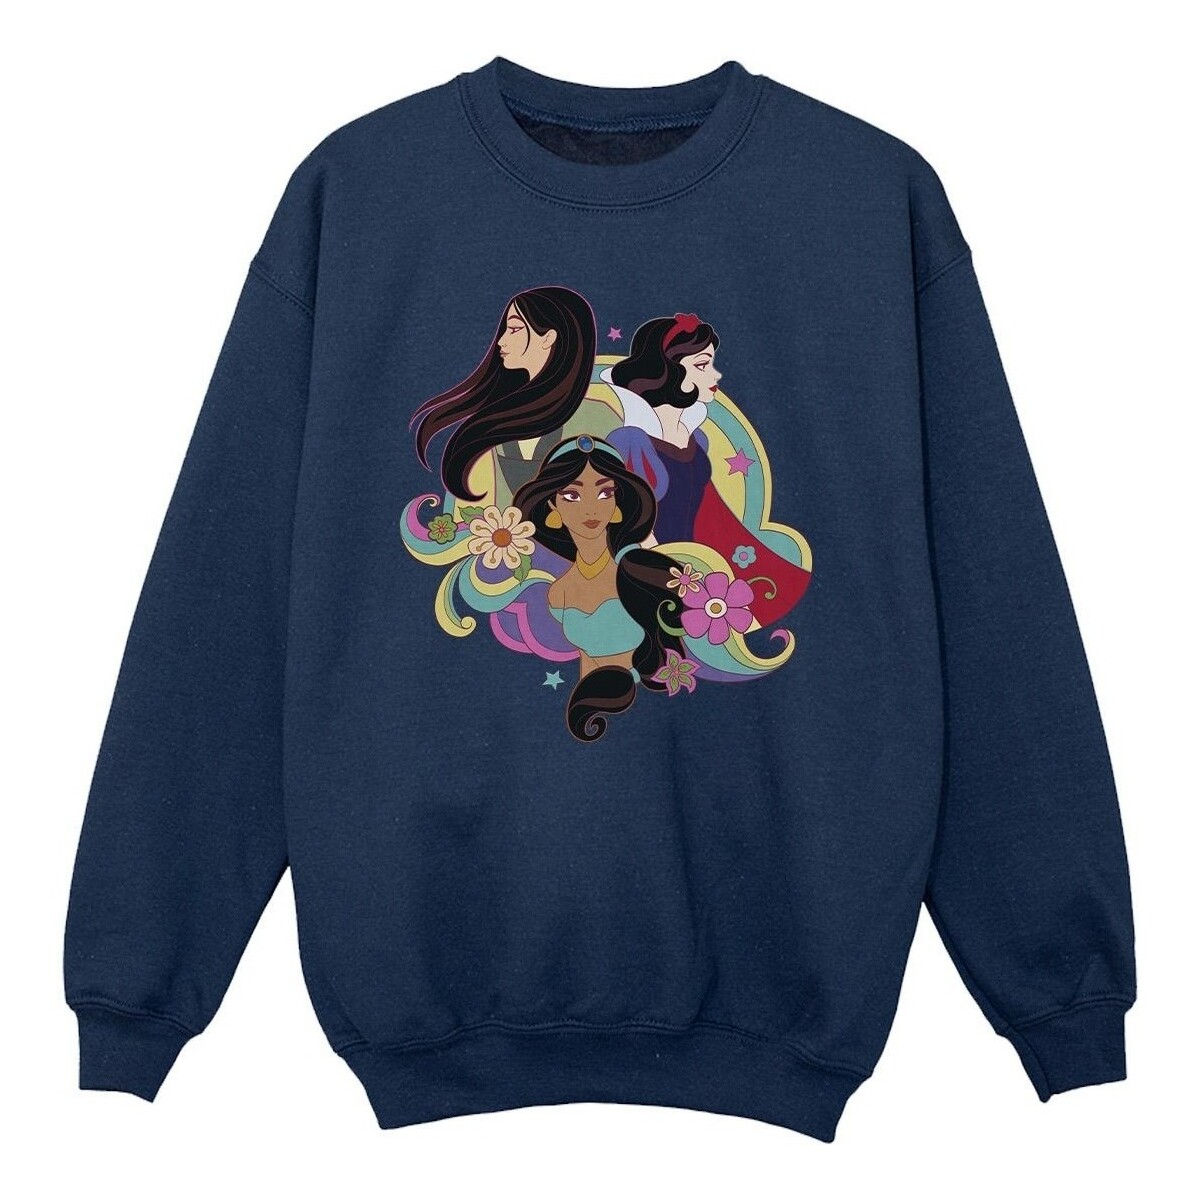 Vêtements Fille Sweats Disney Princess Mulan Jasmine Snow White Bleu